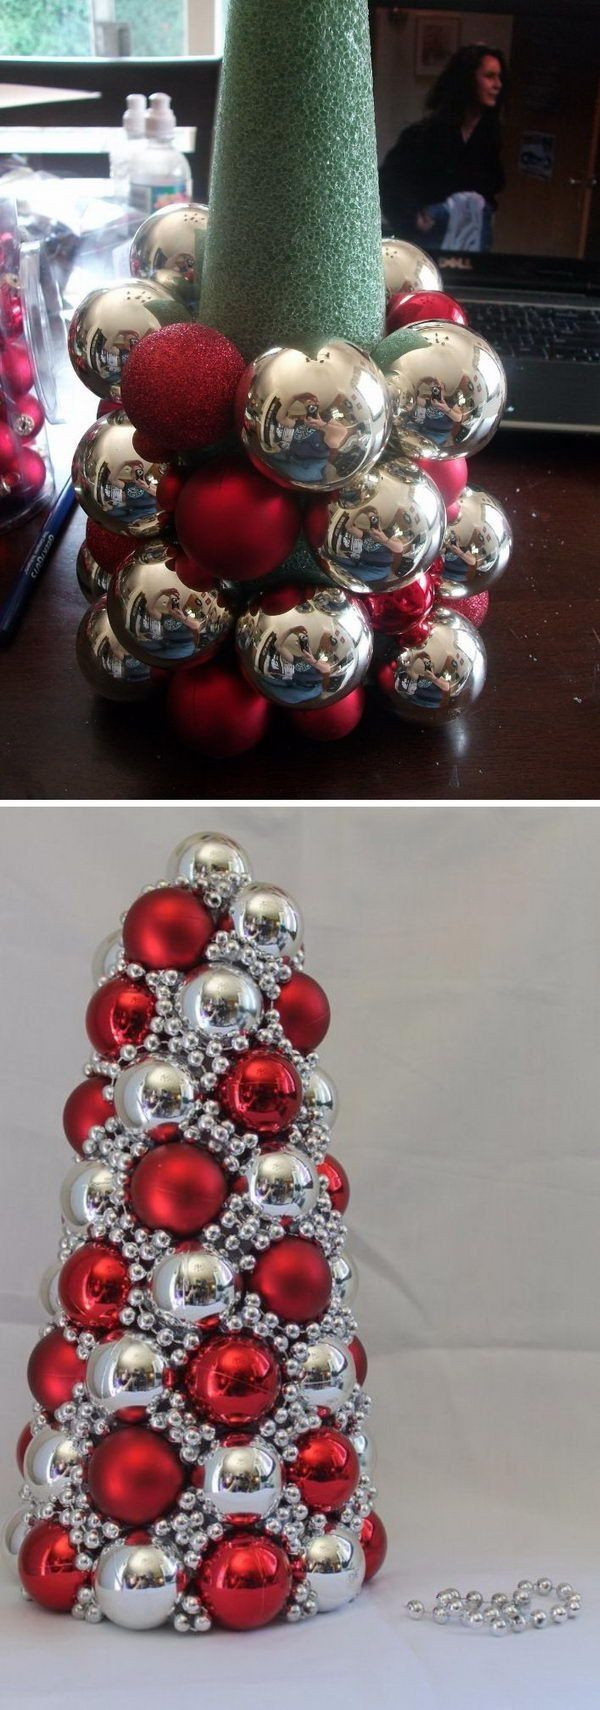 Most Attractive Christmas Bazaar Craft Ideas
 Image result for most attractive christmas bazaar craft